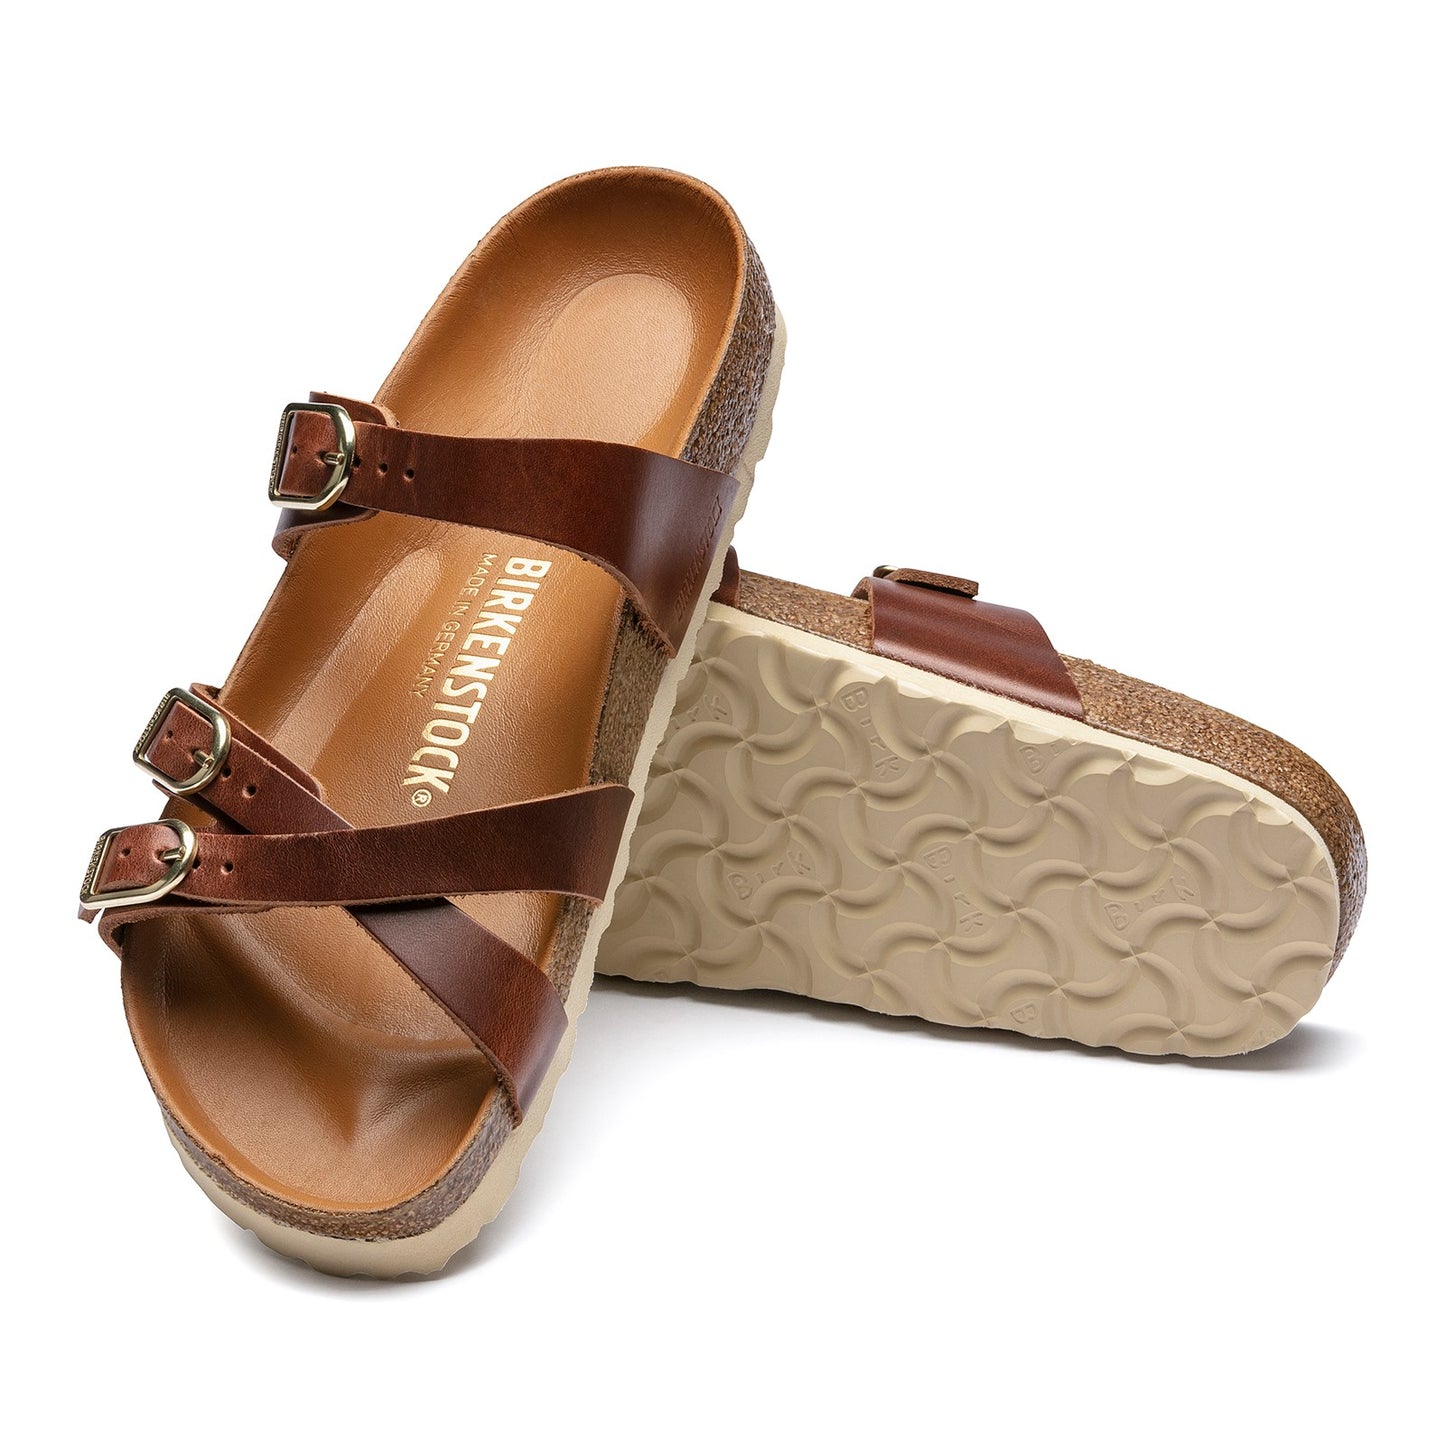 Peltz Shoes  Women's Birkenstock Franca Sandal - Regular Width COGNAC 1017 567 R